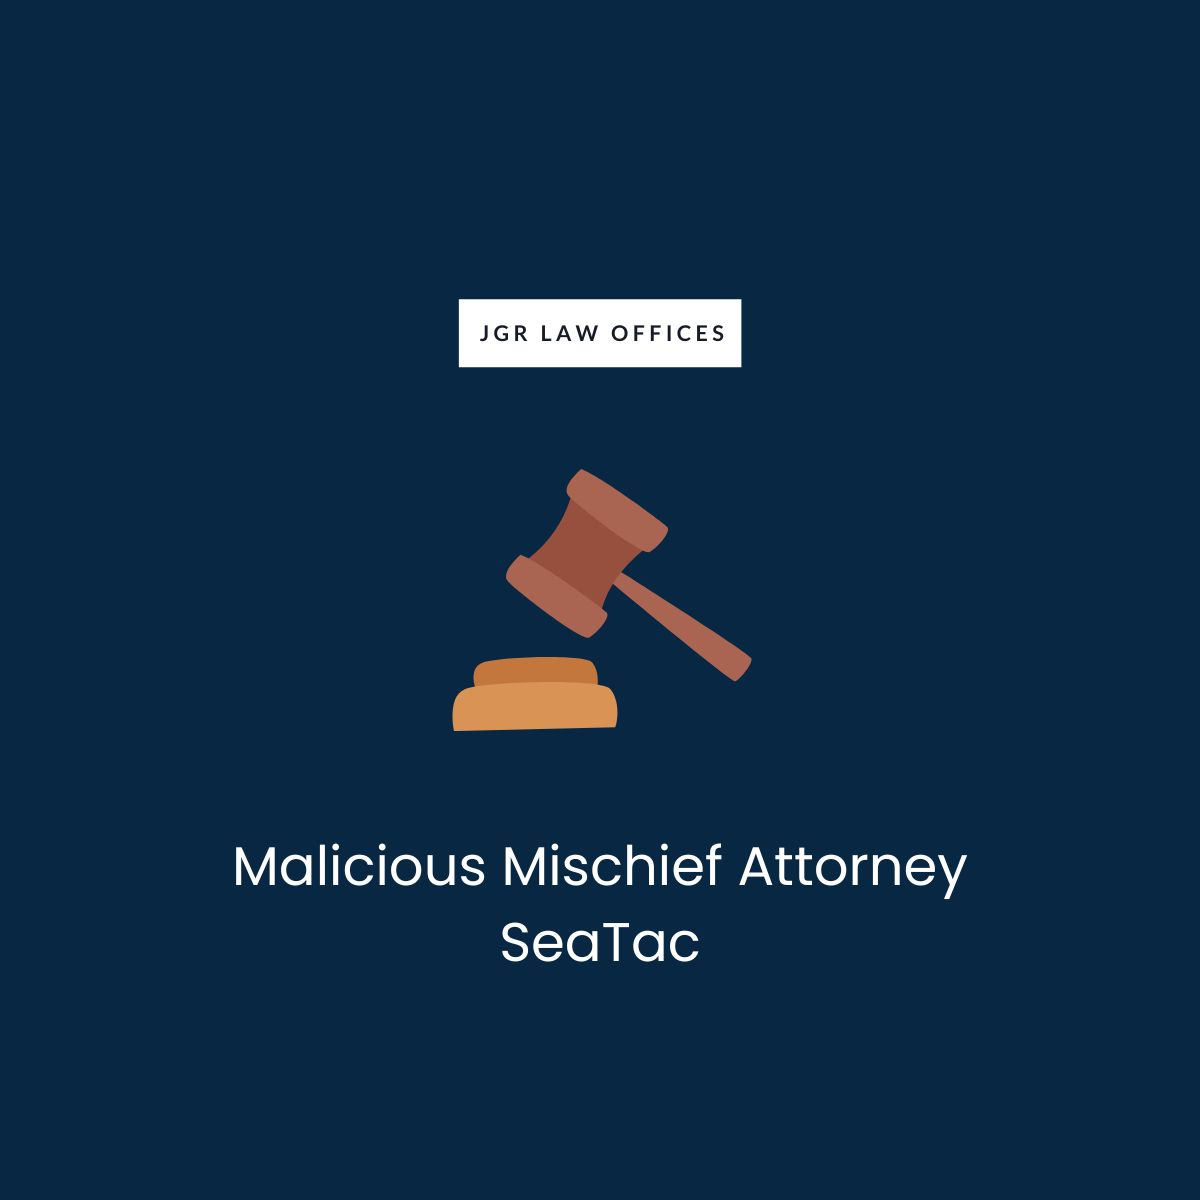 Malicious Mischief Attorney SeaTac